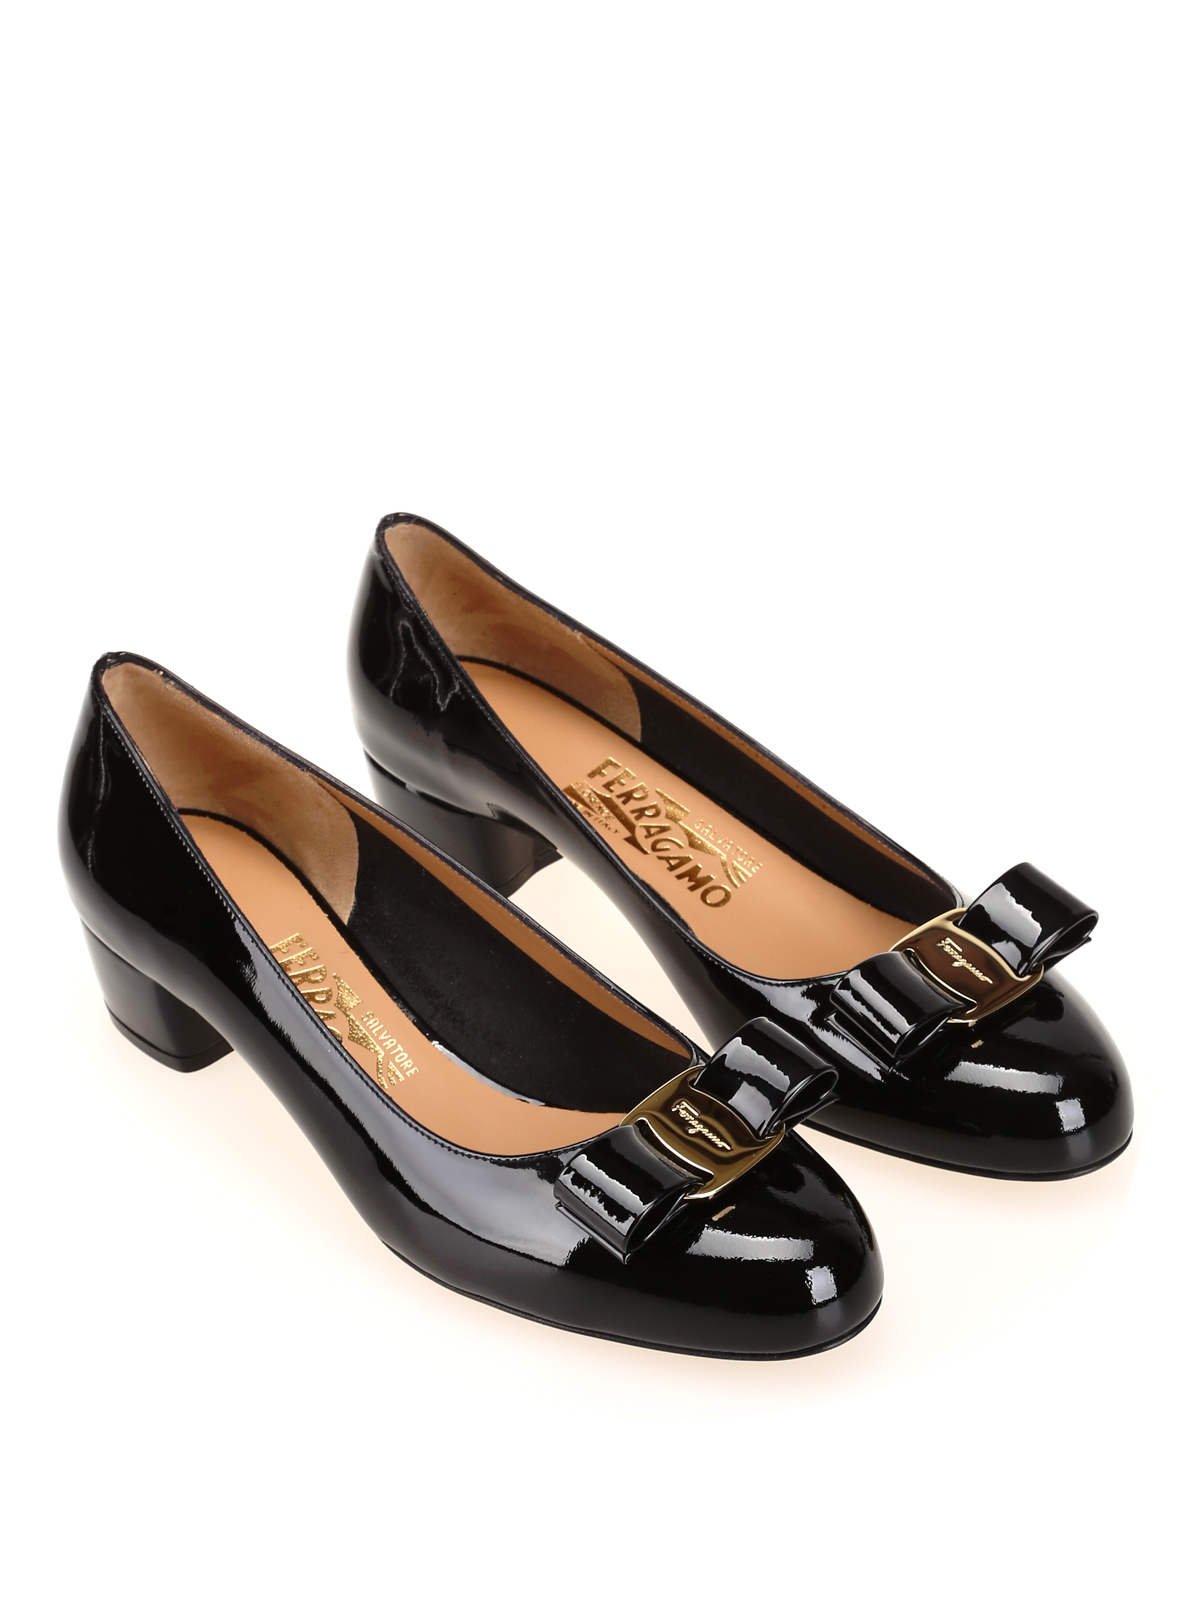 Court shoes Salvatore Ferragamo Vara 1 black patent leather pumps - 591963